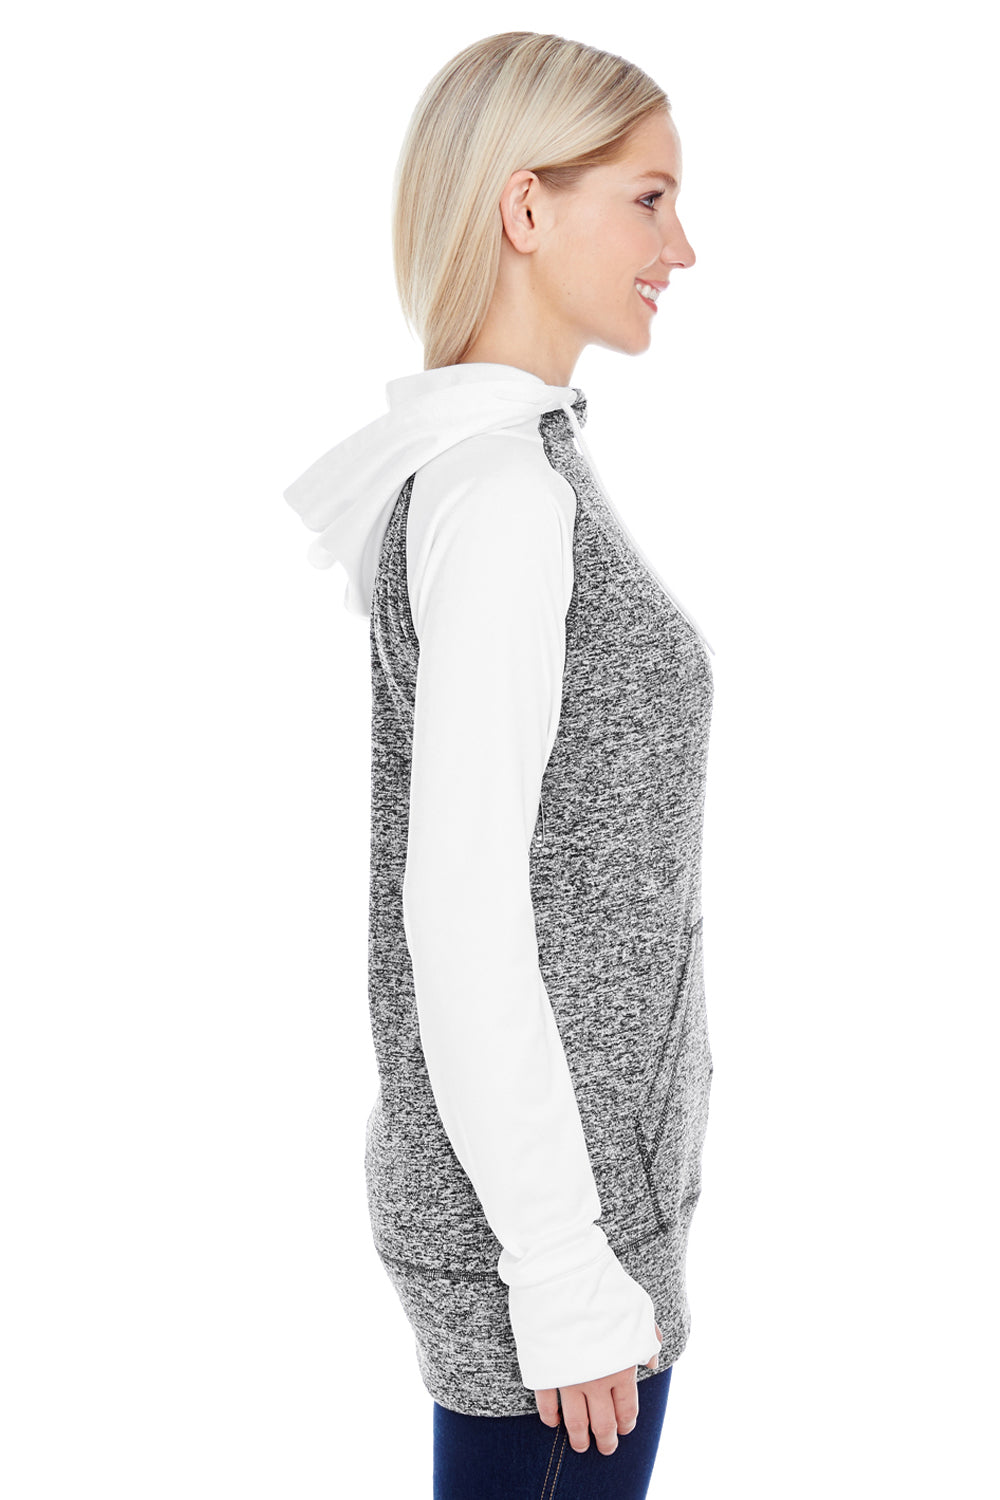 J America JA8618 Womens Cosmic Fleece Hooded Sweatshirt Hoodie Charcoal Grey/White Side